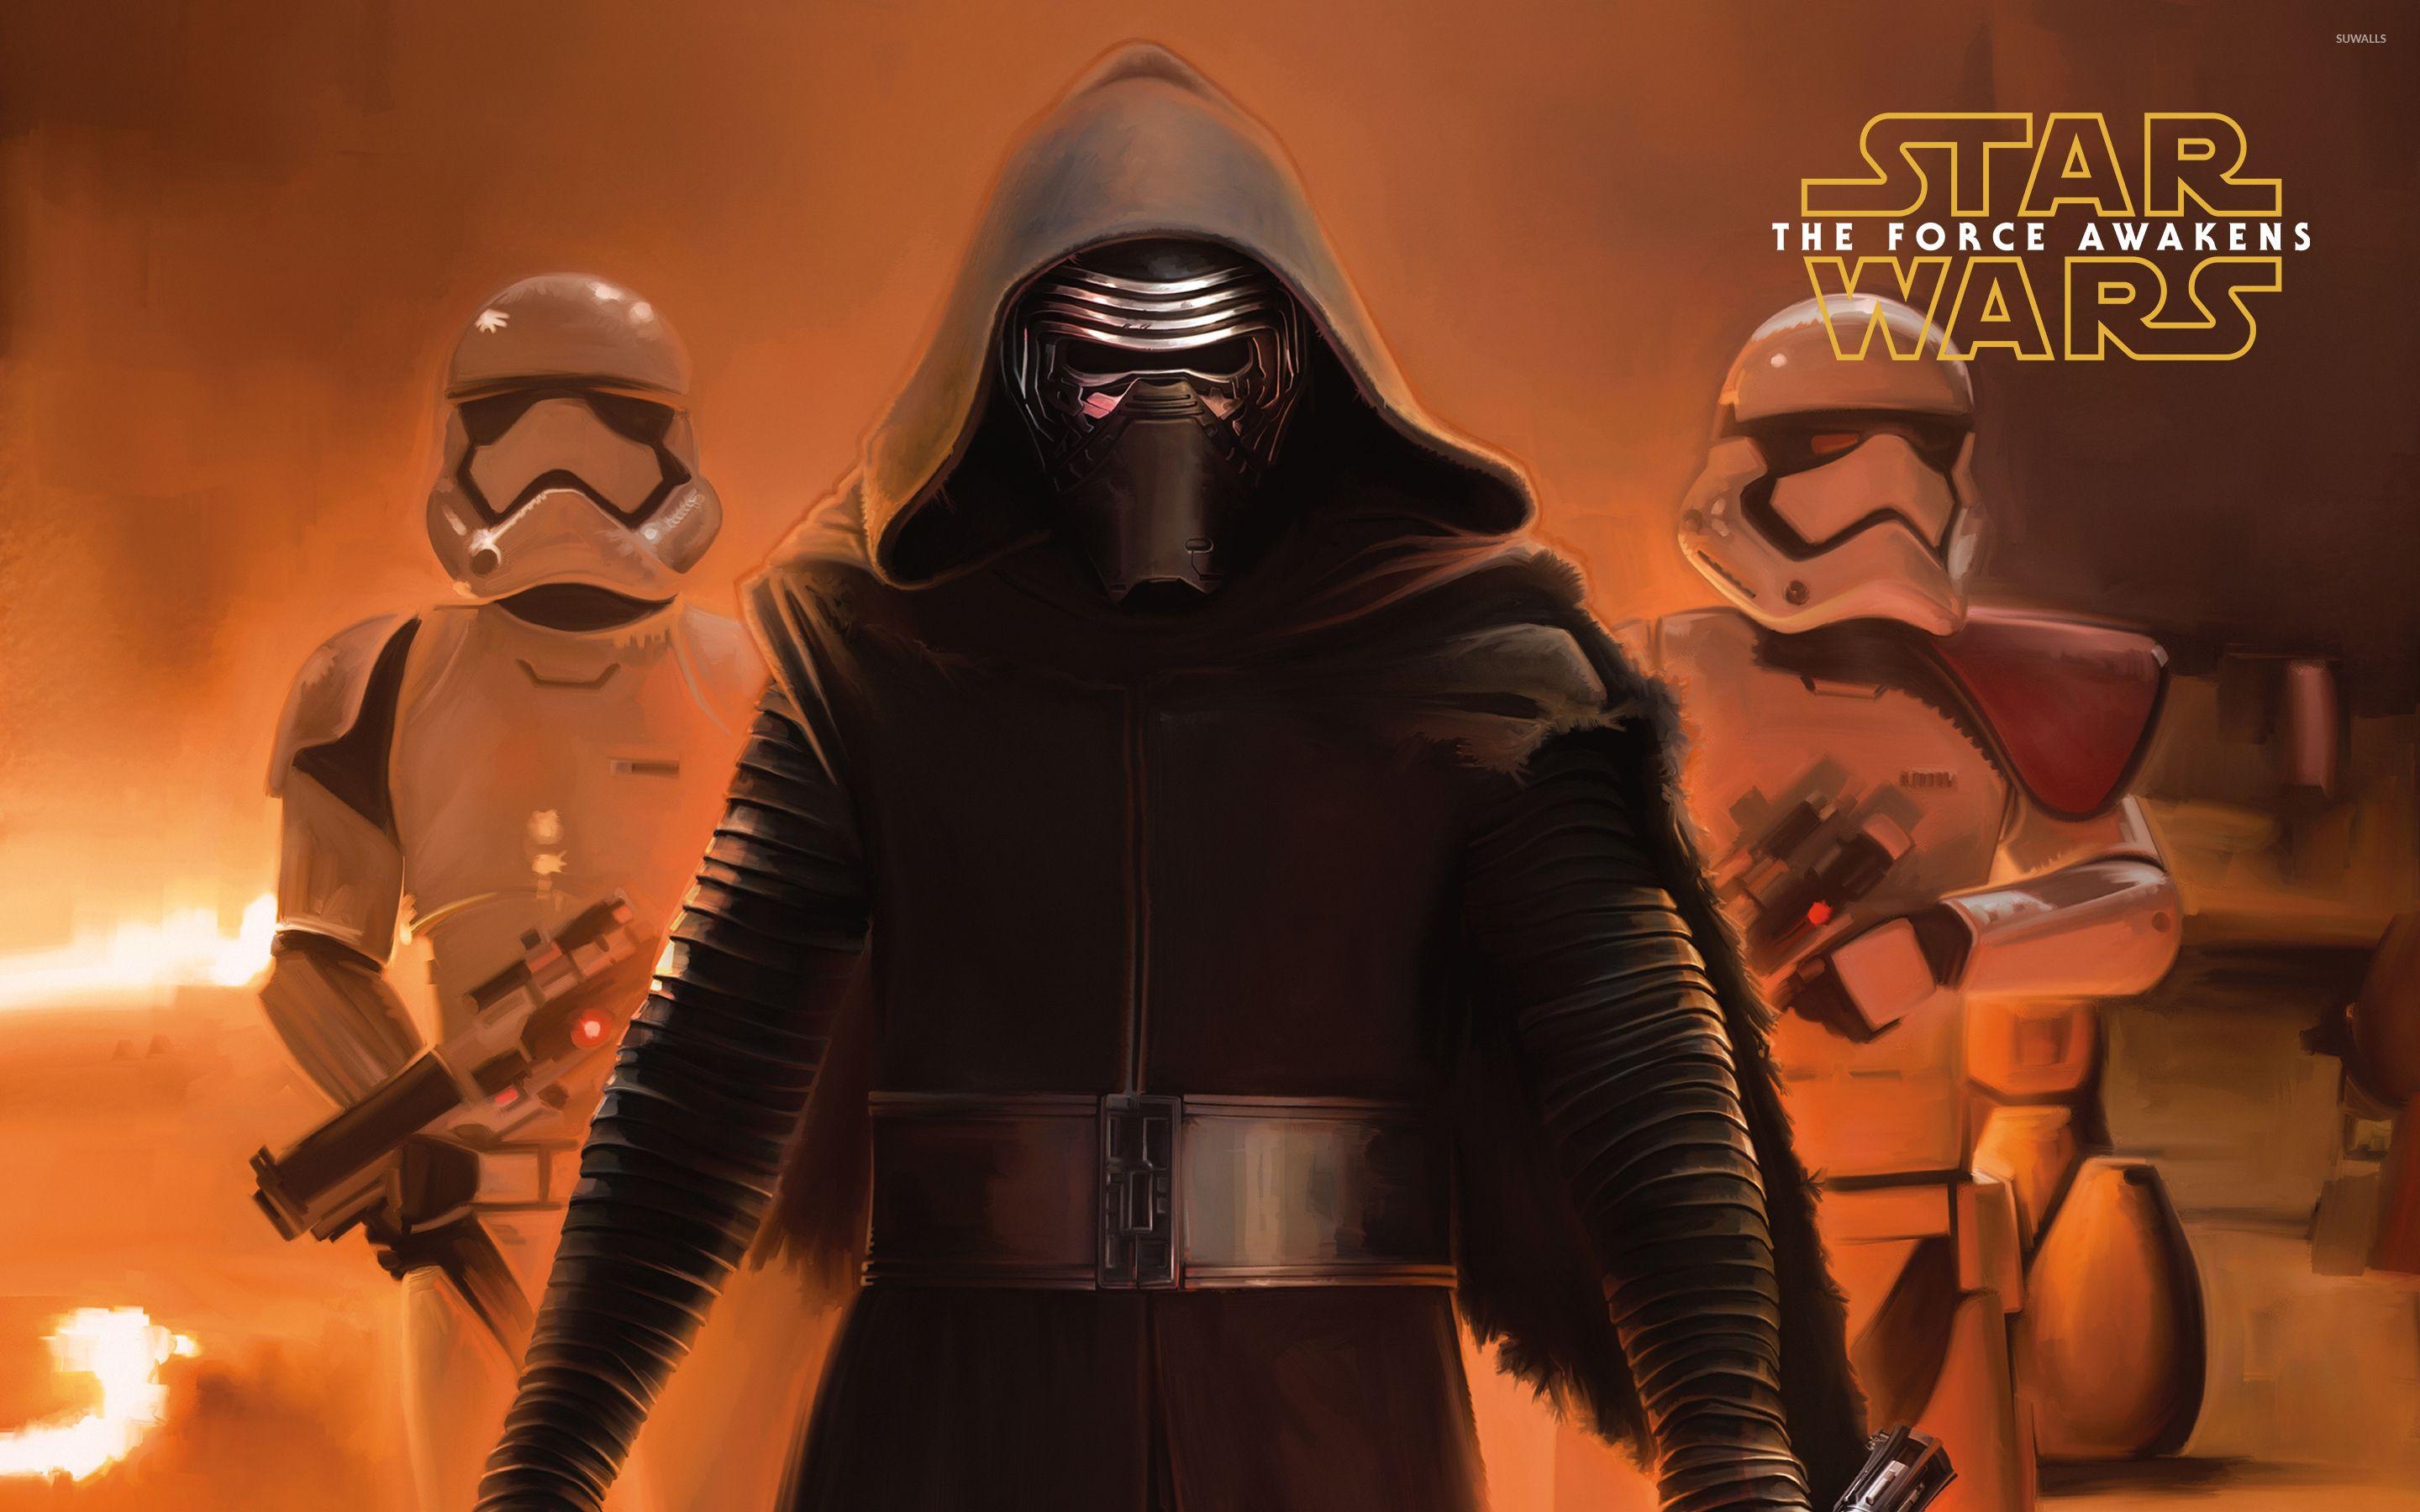 Kylo Ren and stormtroopers Wars: The Force Awakens